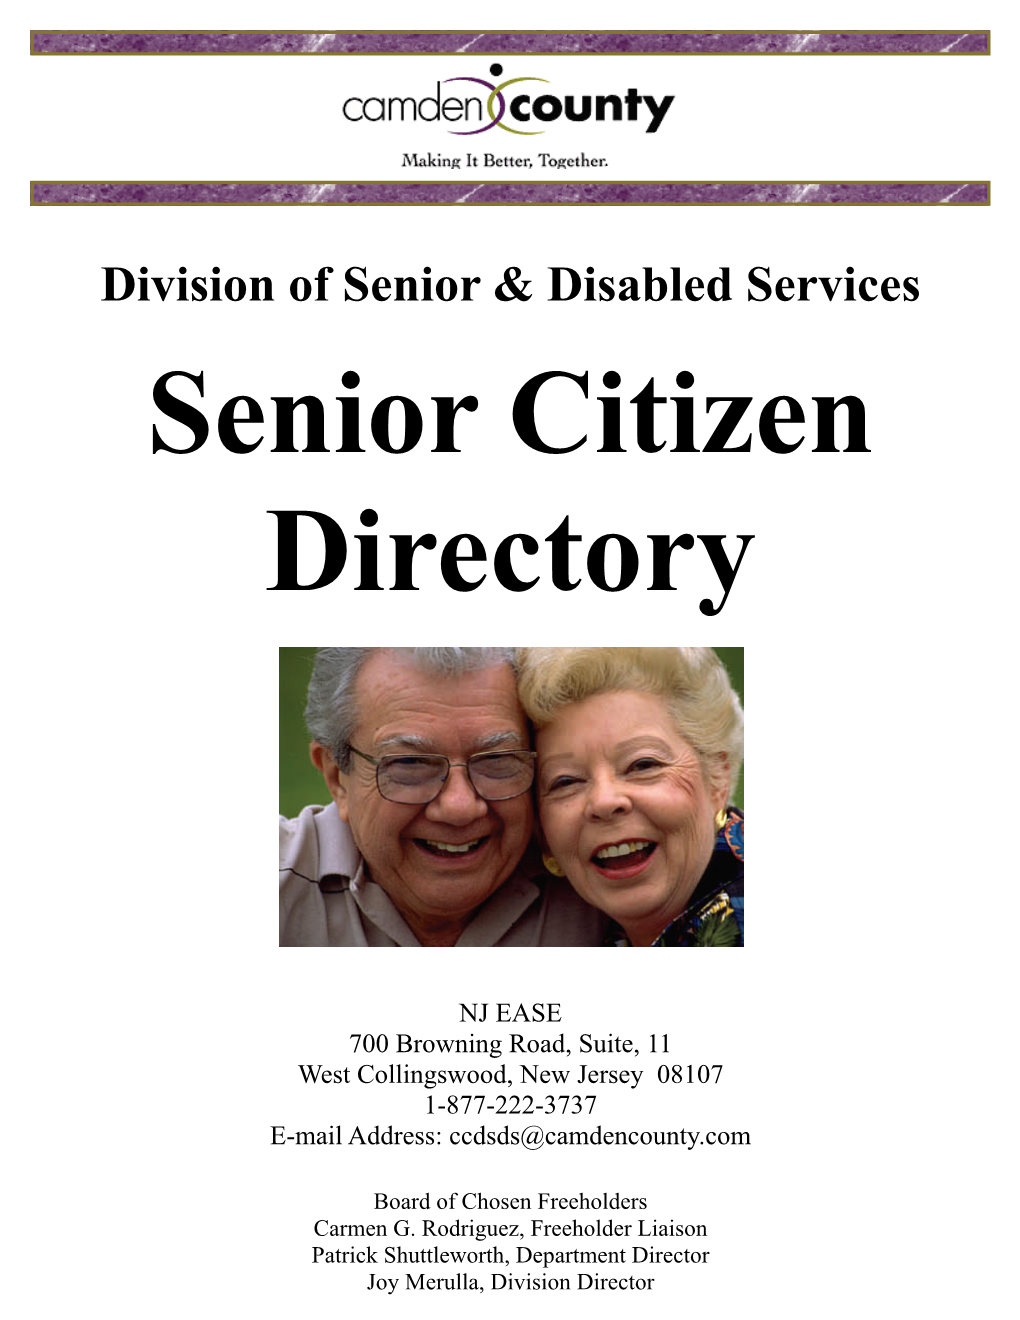 Division of Senior & Disabled Services Senior Citizen Directory